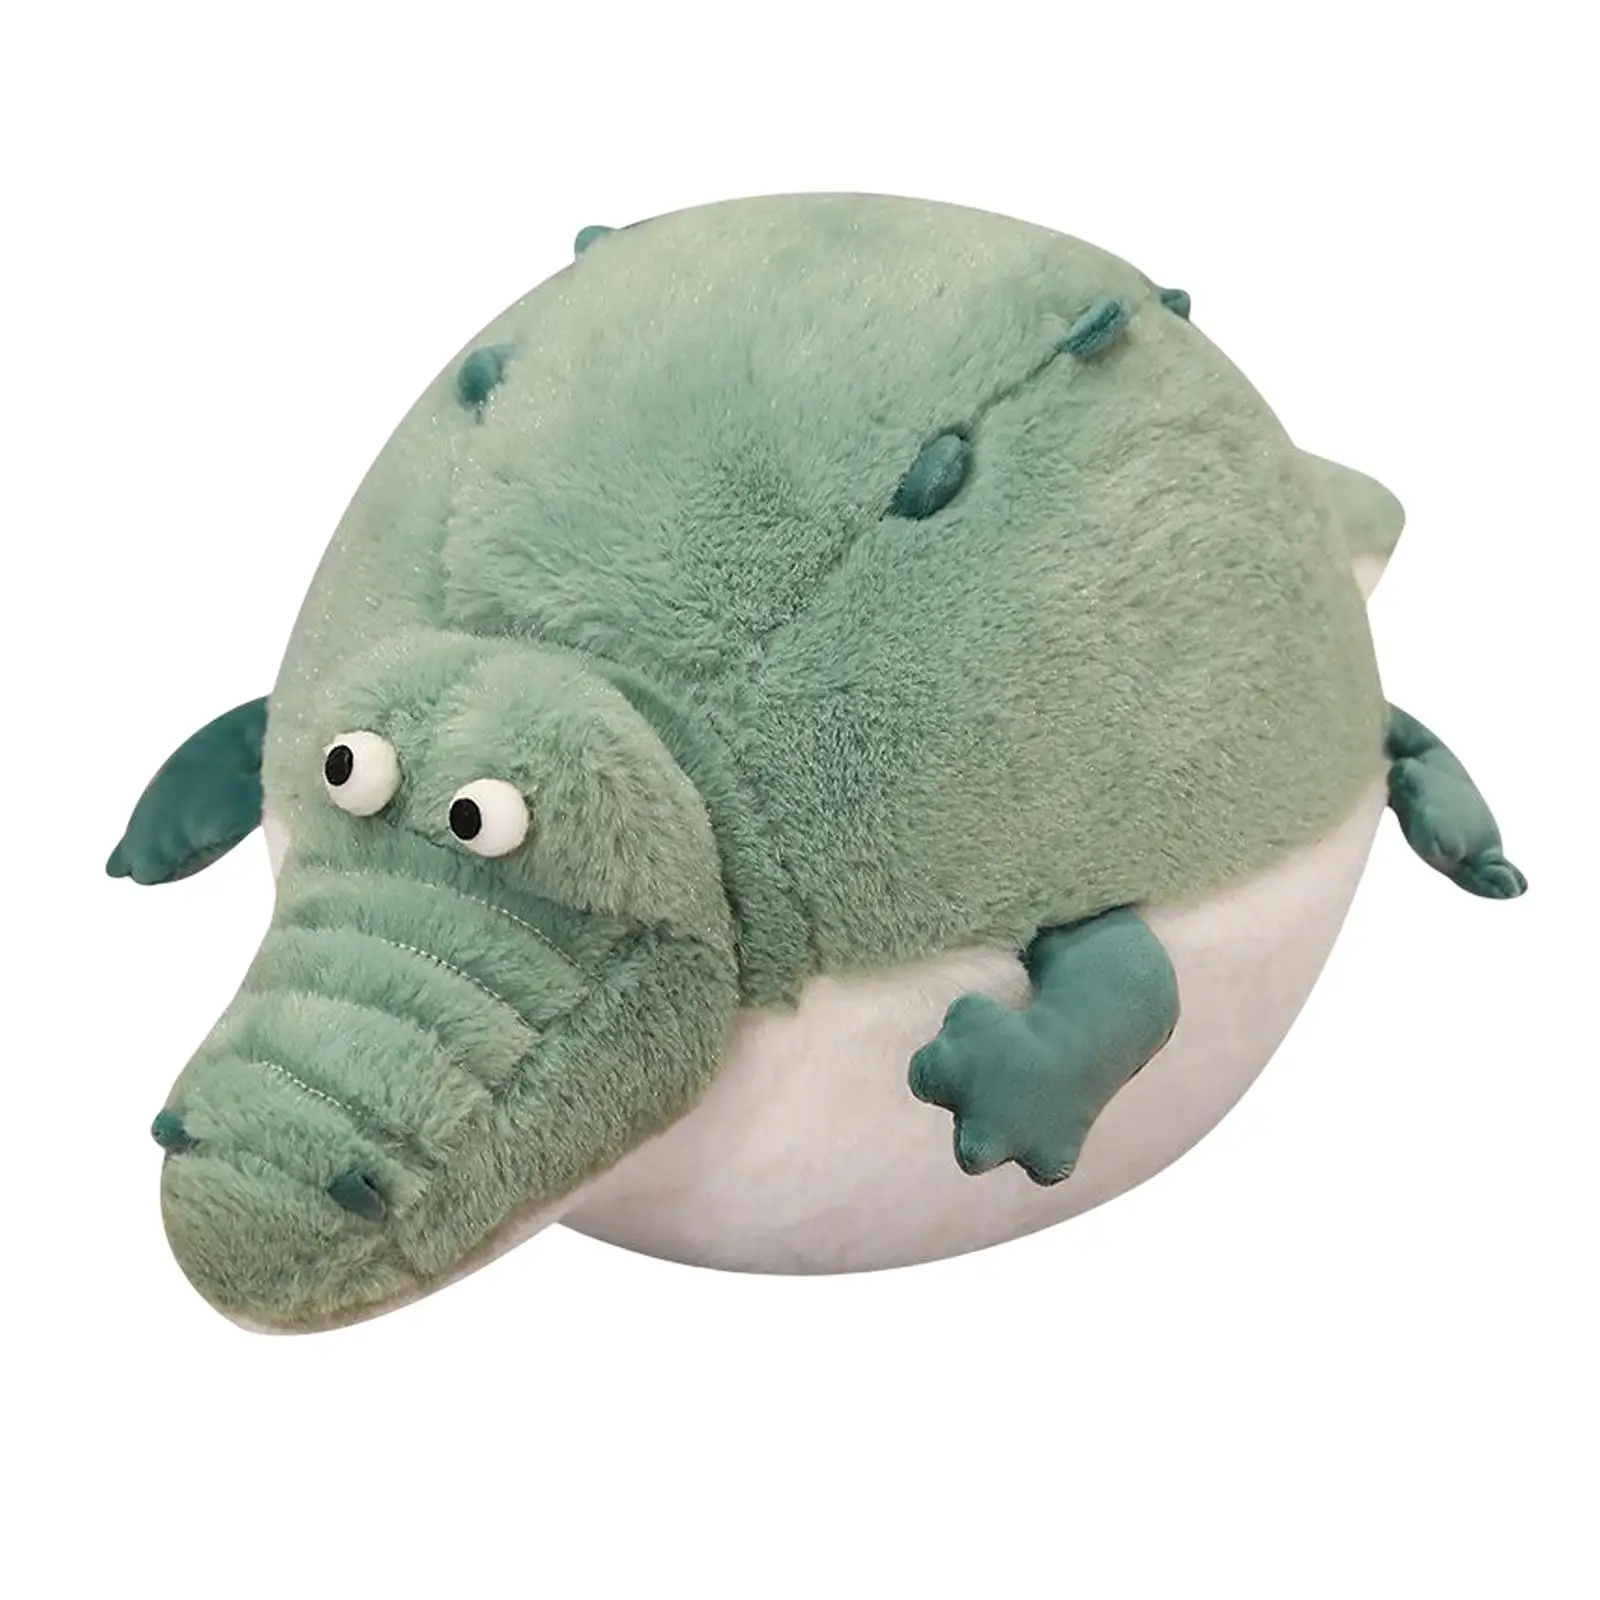 Simulation Puffer Fish Plush Toy Plush Toy Cushion Animal Doll for Halloween